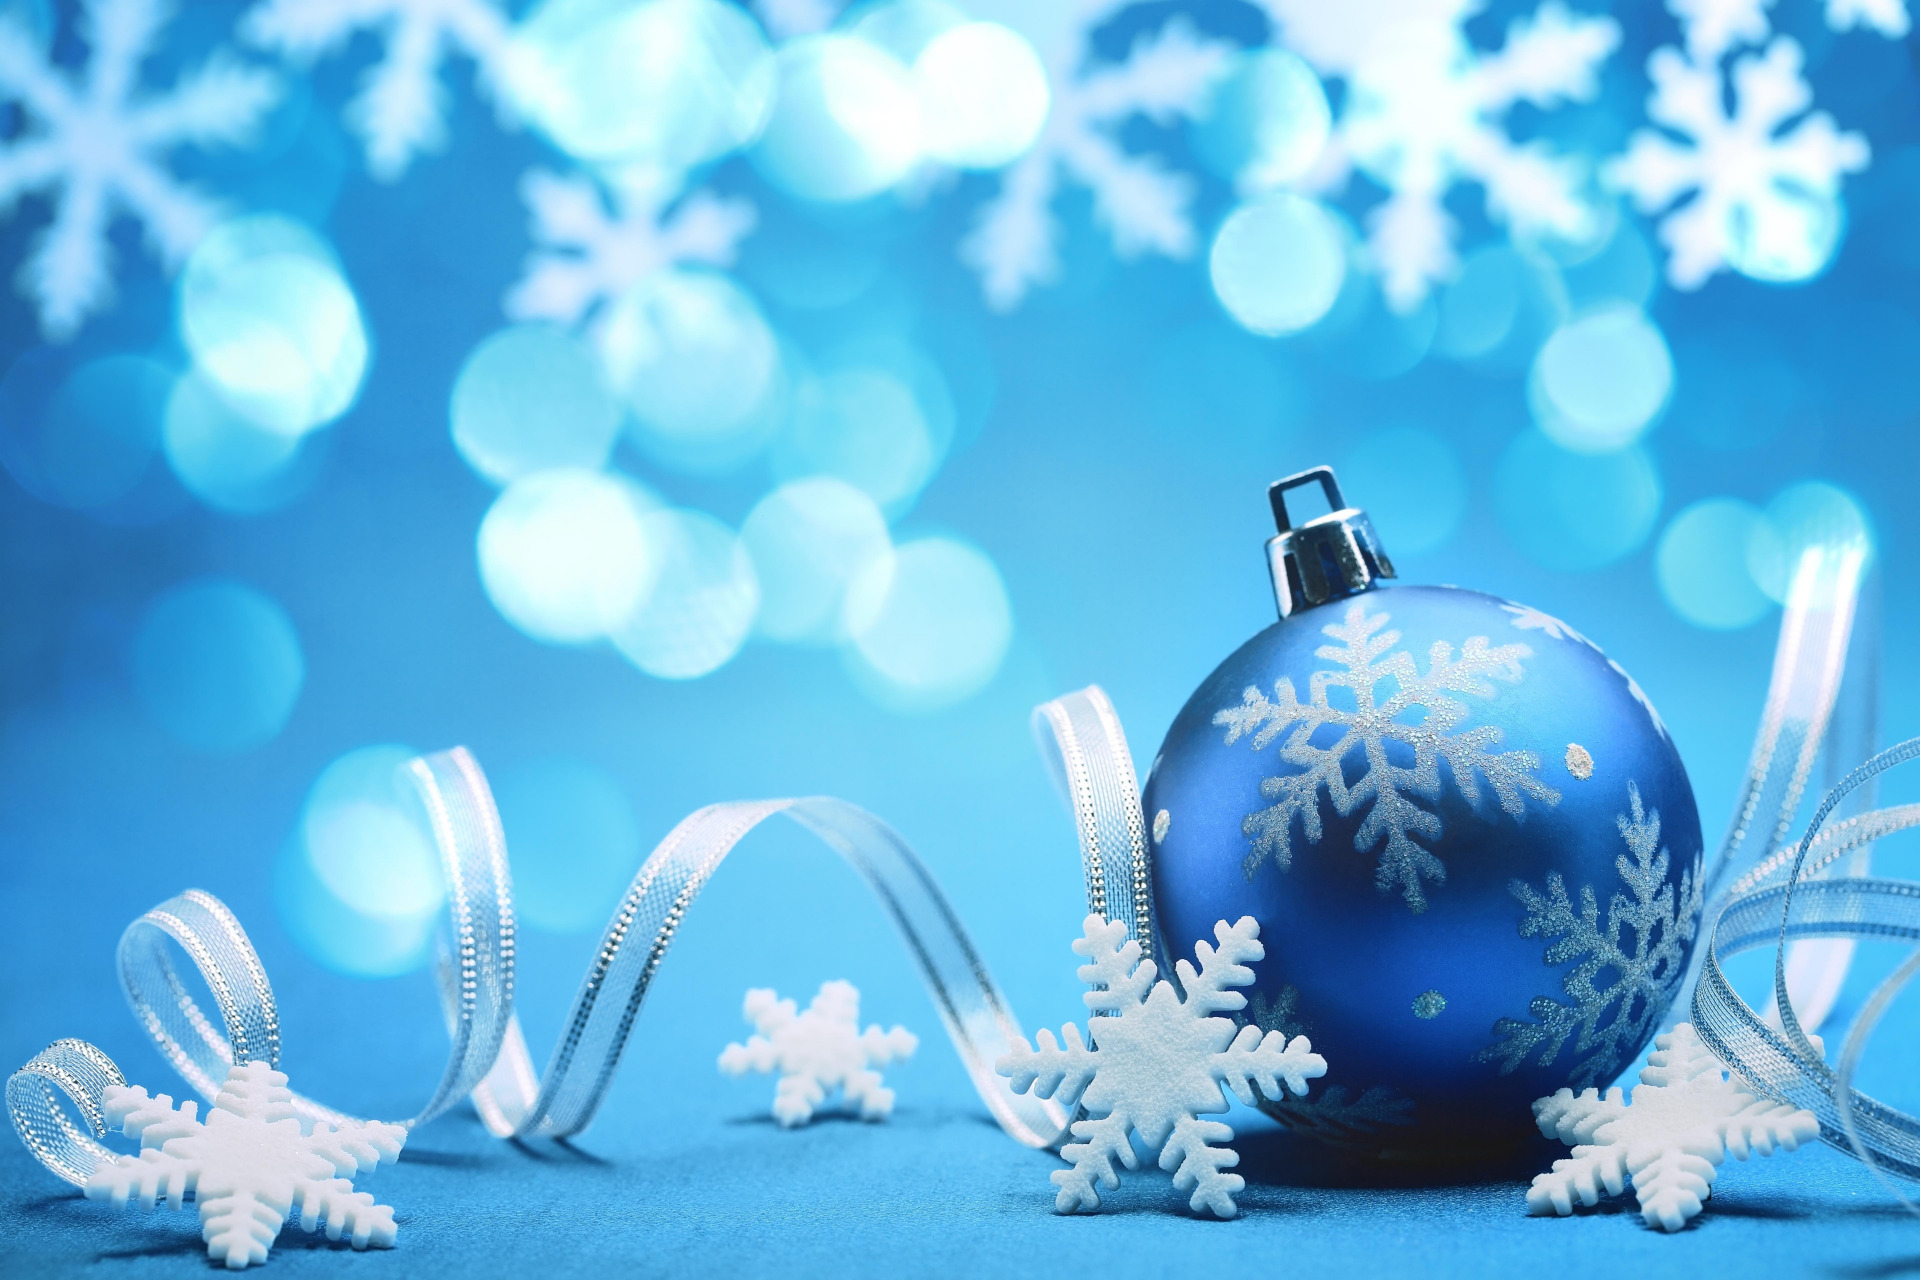 Blue Christmas Holiday Background